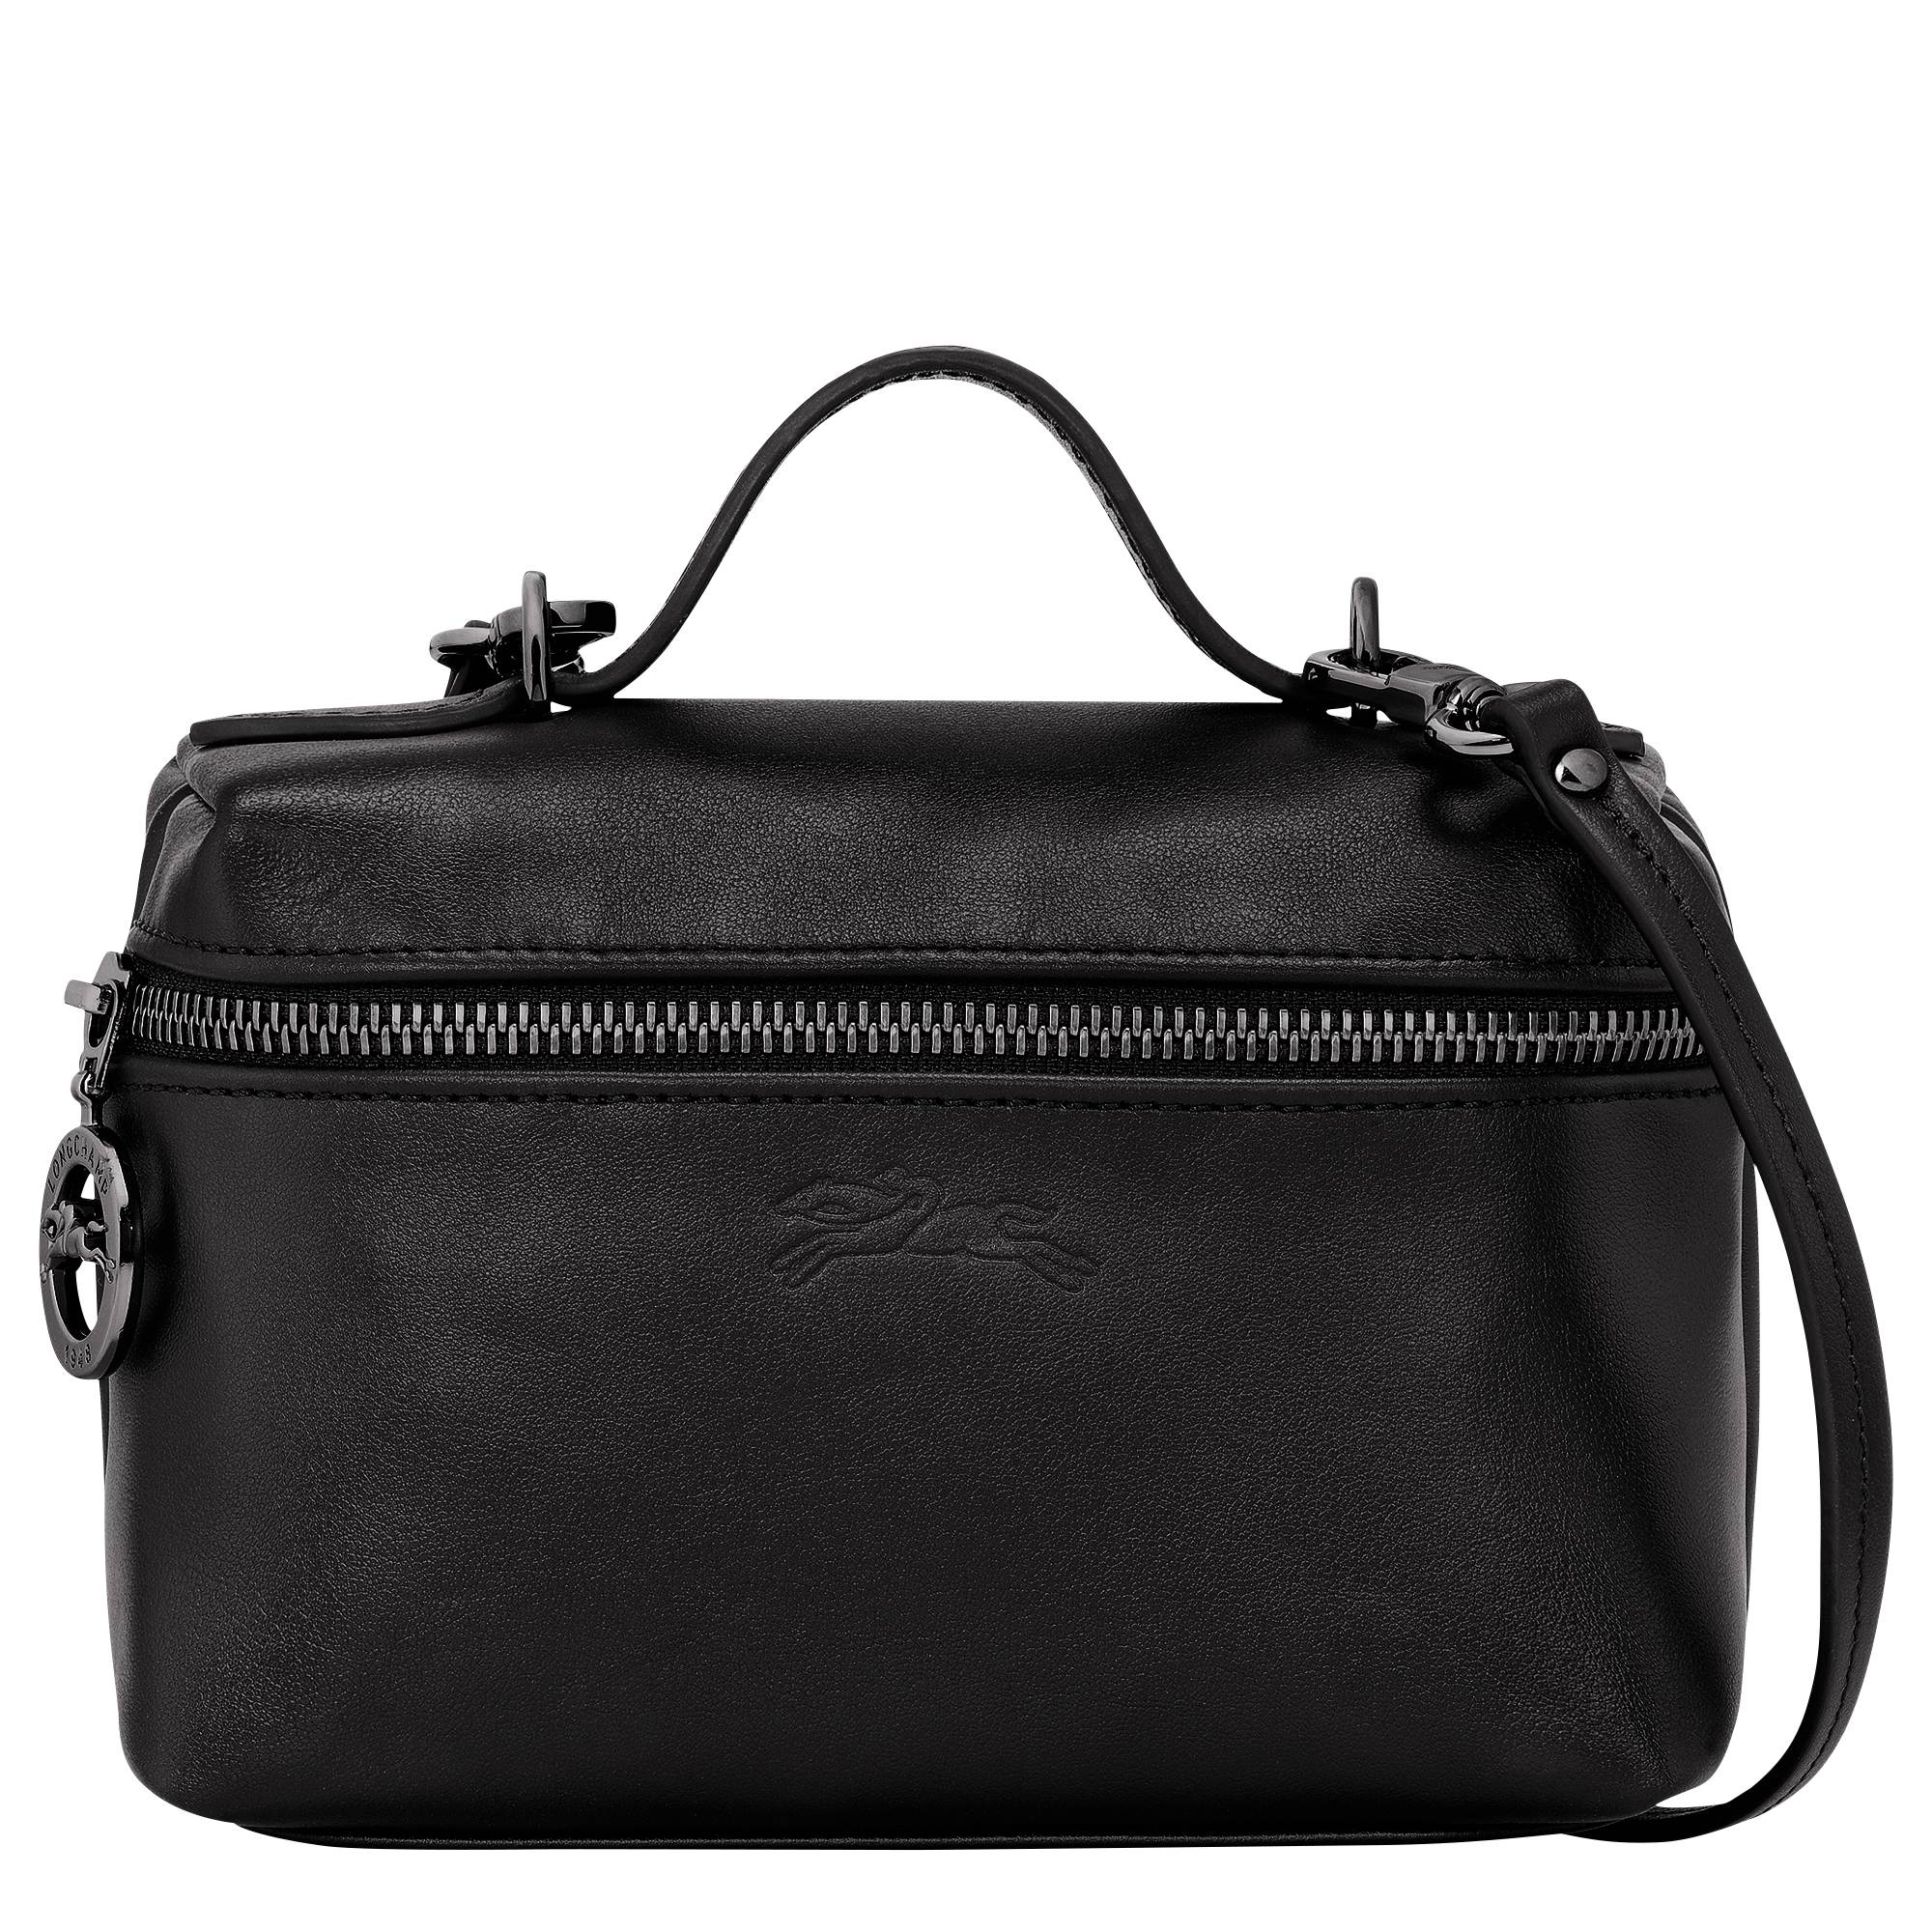 Le Pliage Xtra XS Crossbody bag Navy - Leather (10188987556)